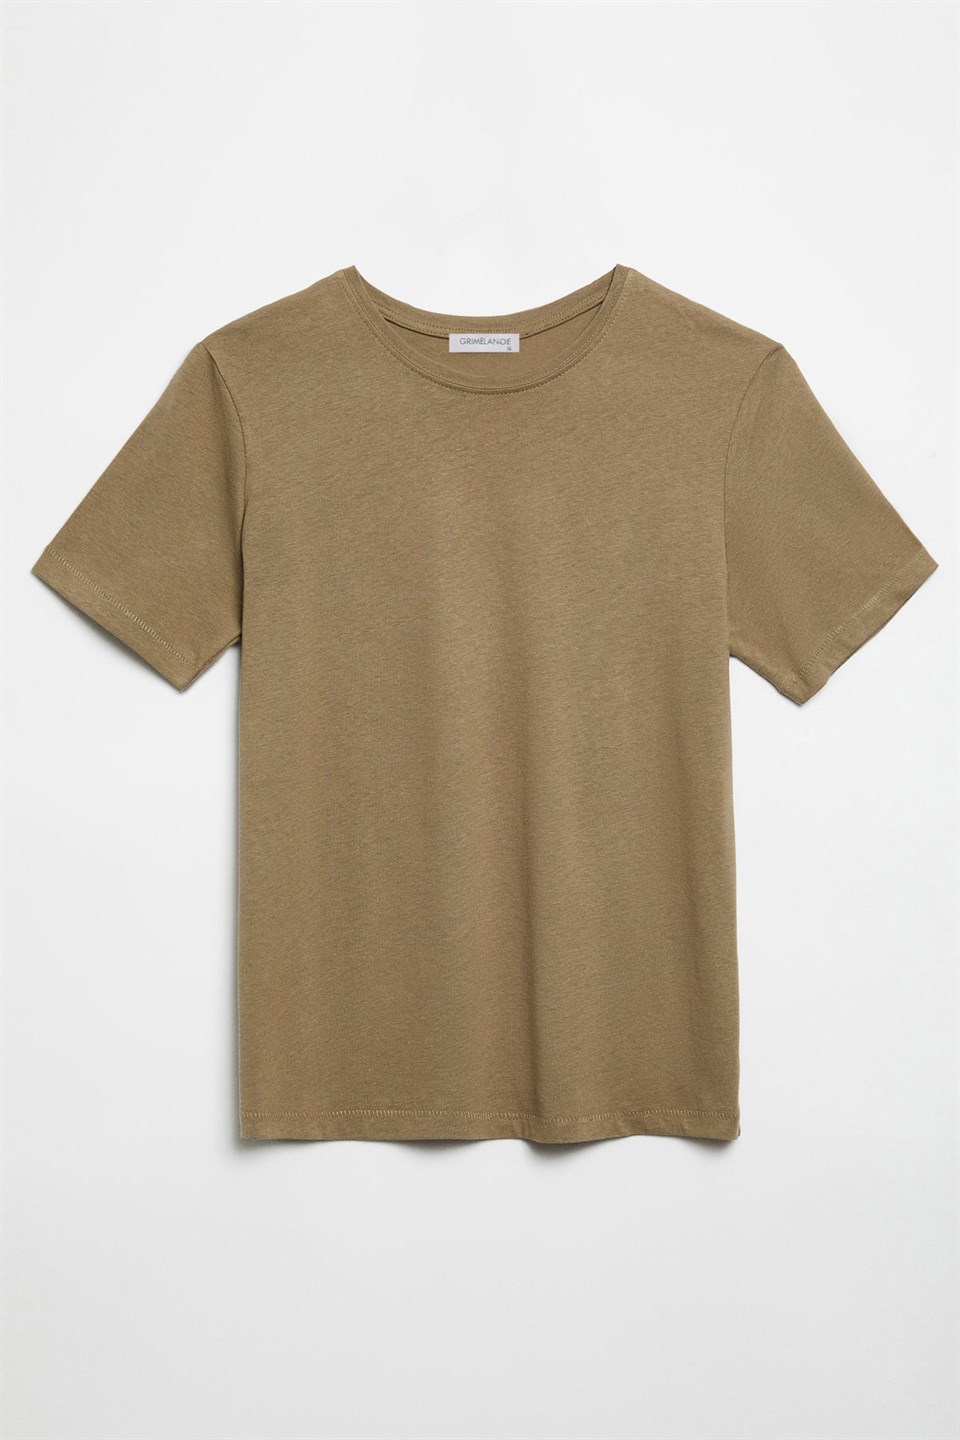 HANNAH Kadın Haki Düz Renk Yuvarlak Yaka Comfort Fit T-Shirt